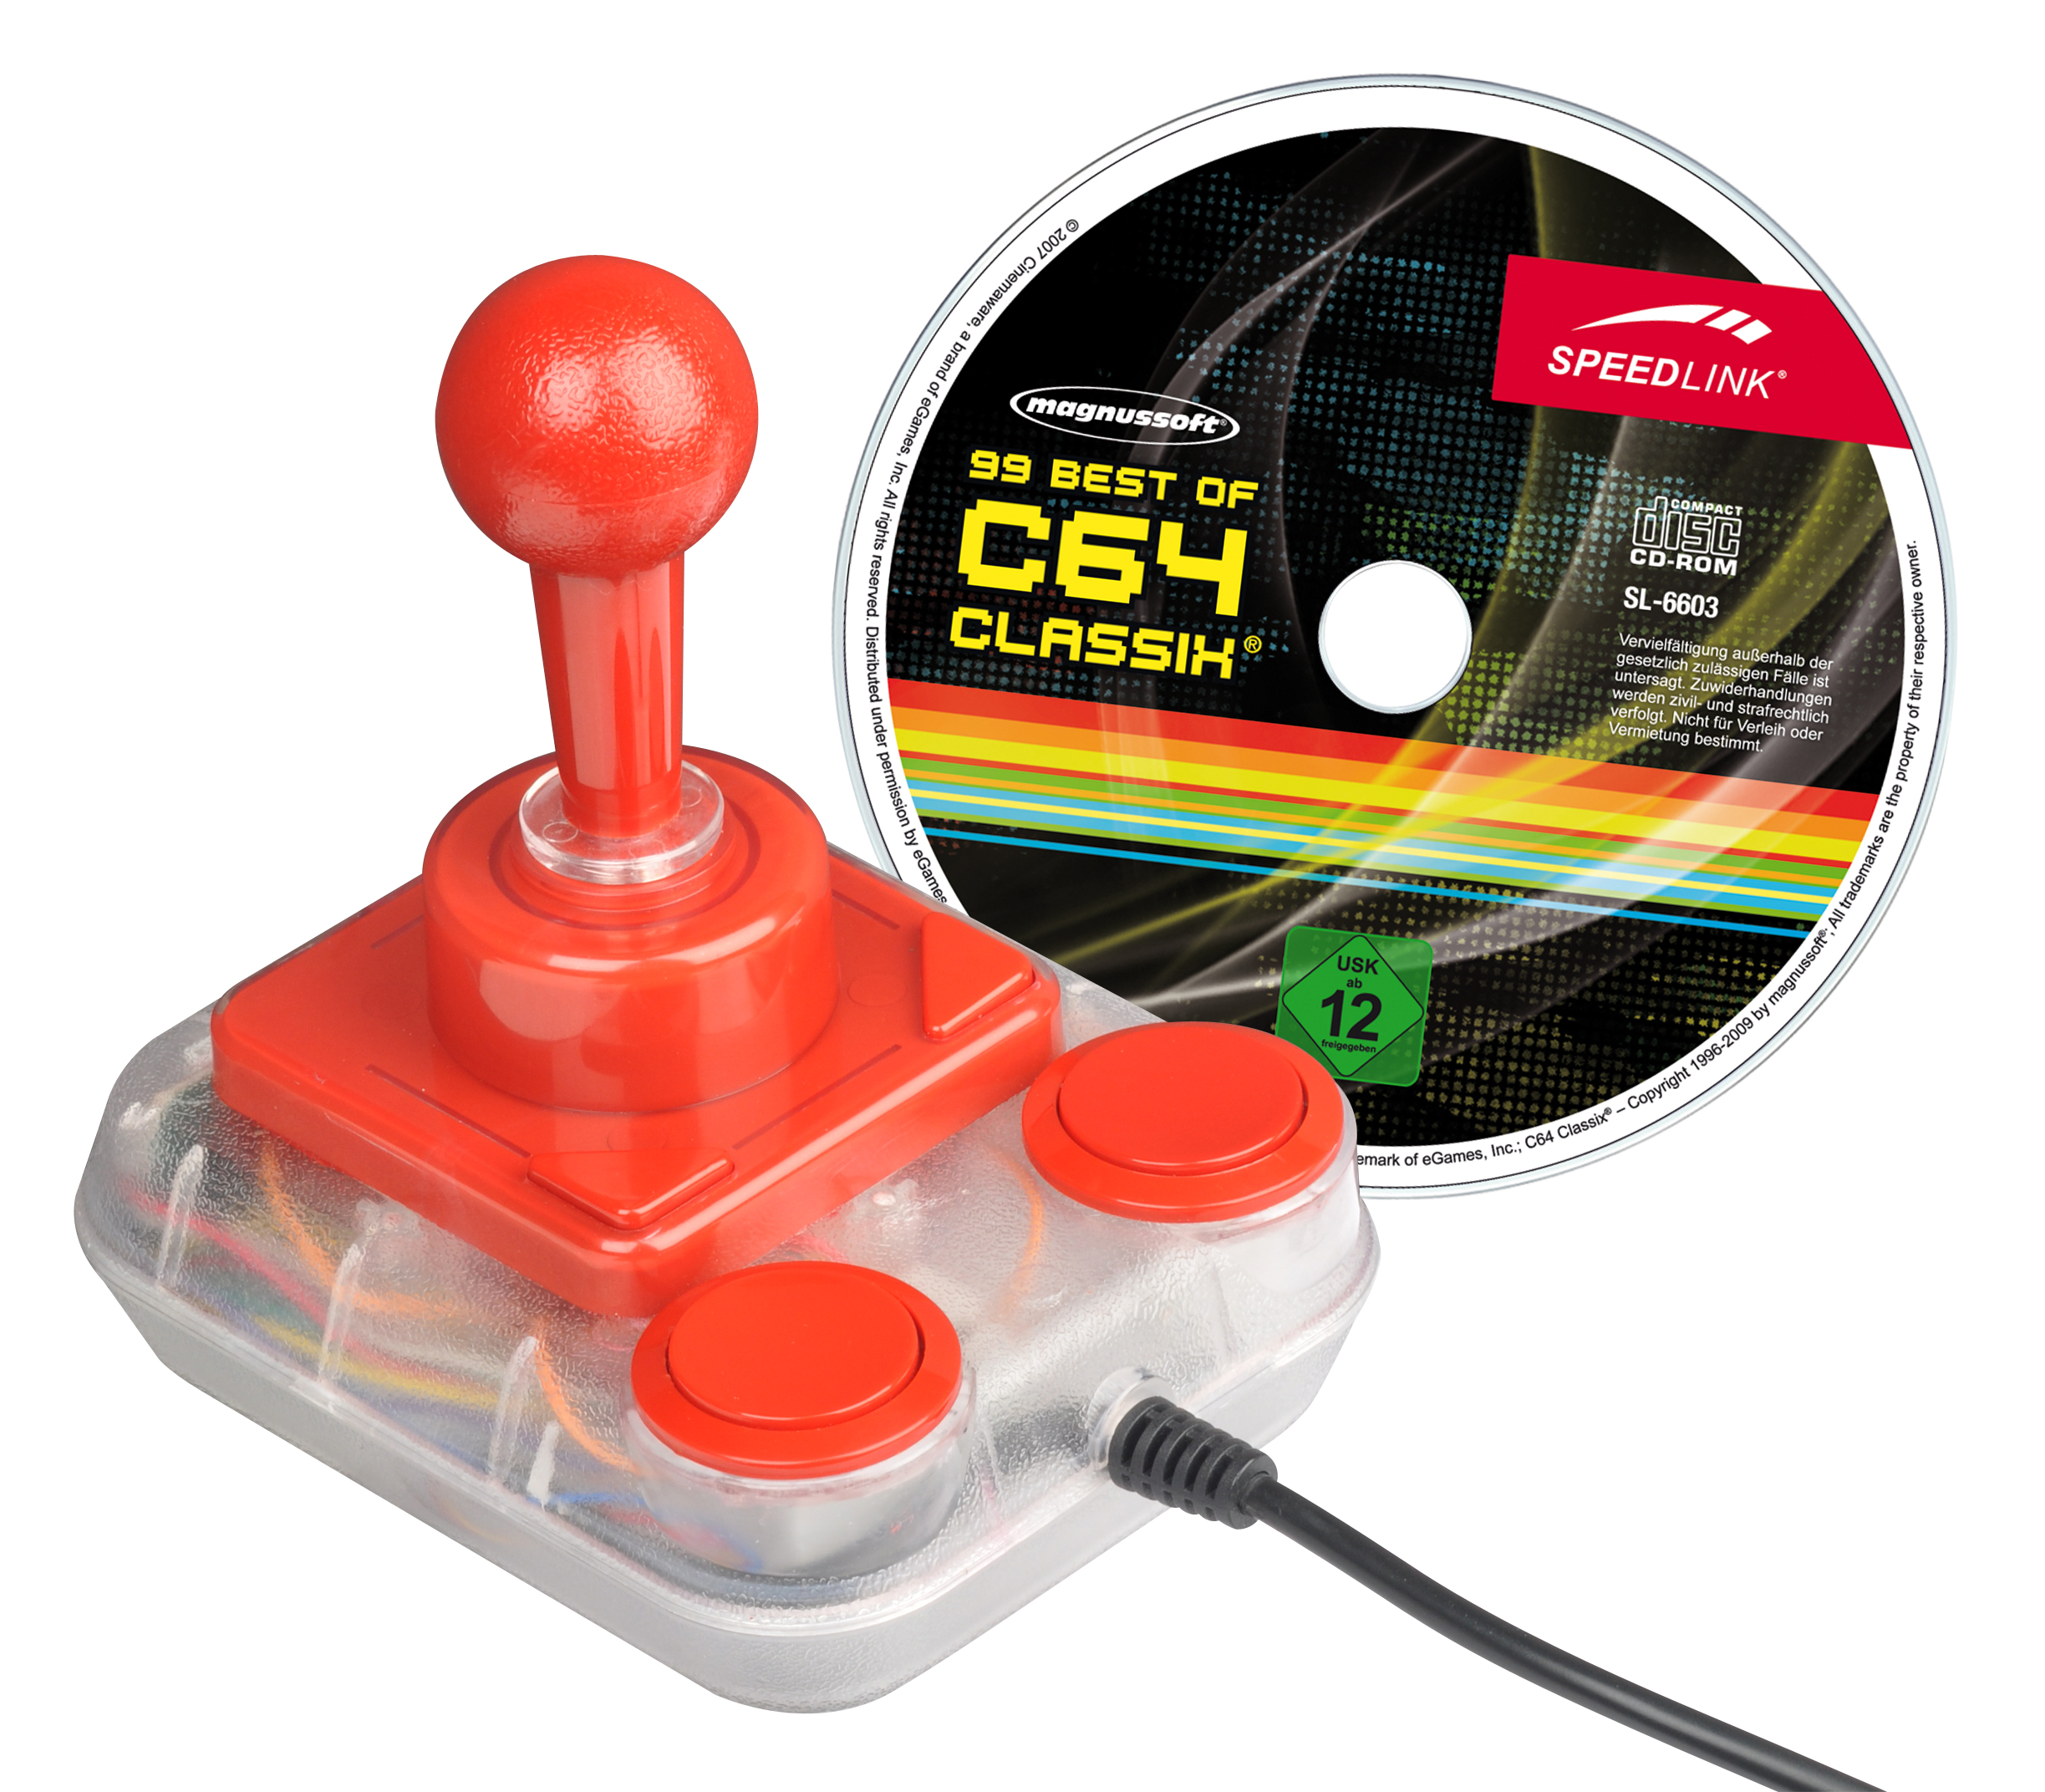 Competition Pro USB Joystick + '99 Best of C64 Classix®' Games Collection,  Jöllenbeck GmbH, Story - PresseBox